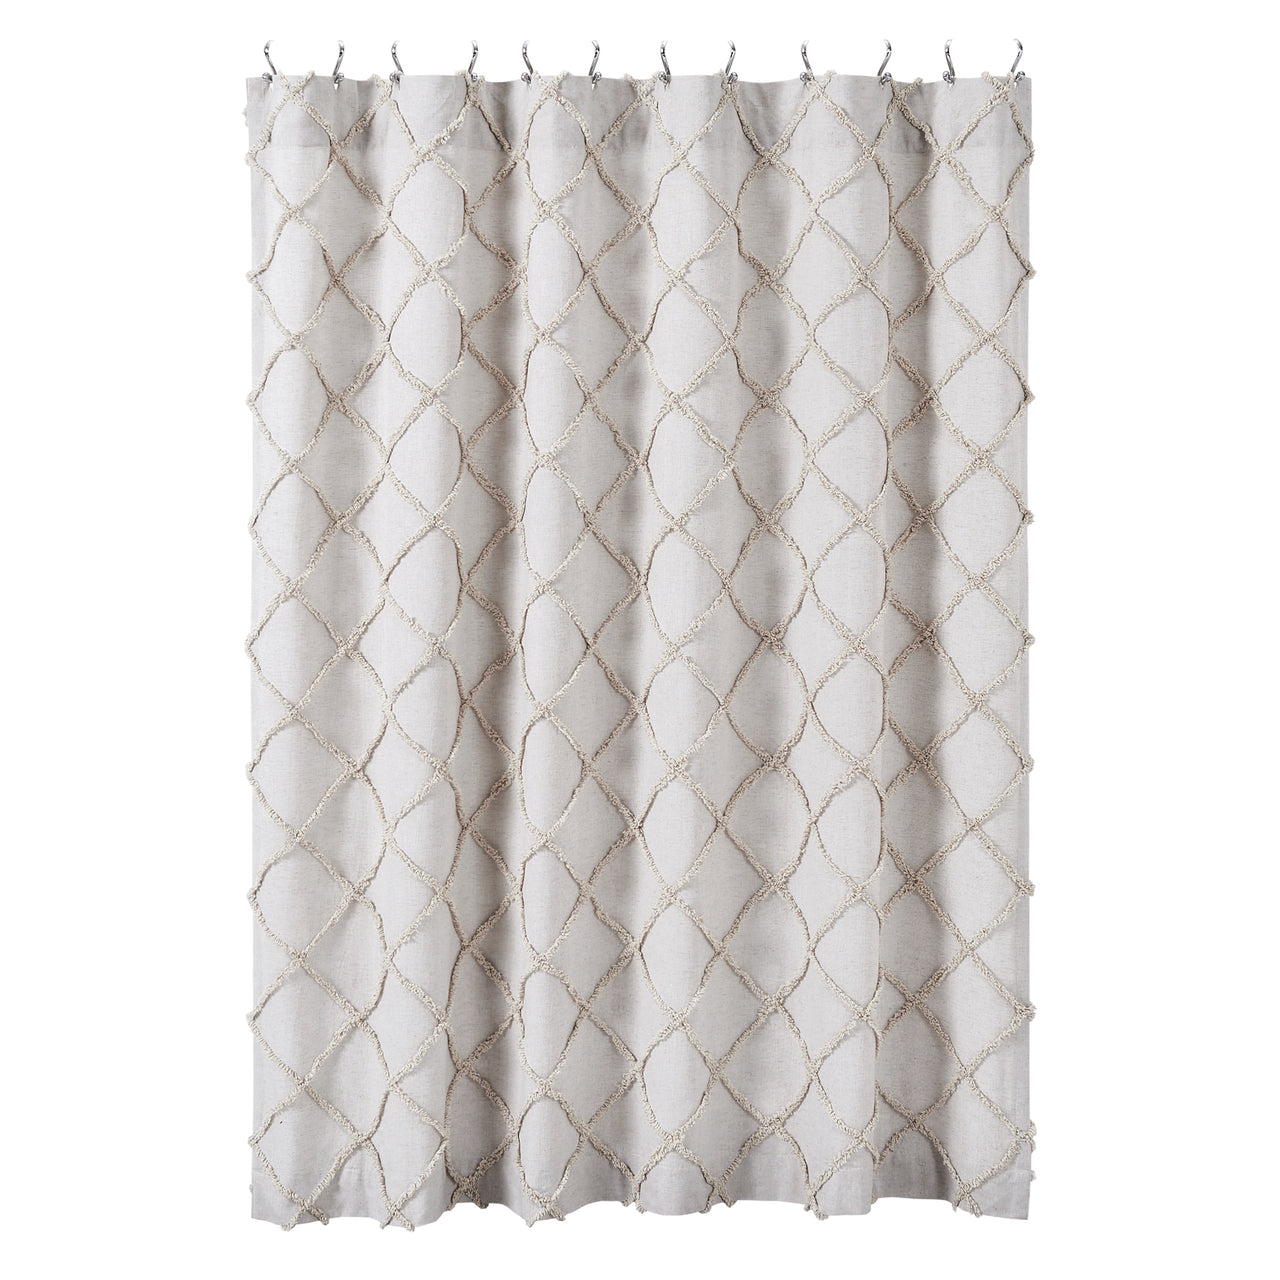 Frayed Lattice Oatmeal Shower Curtain 72x72 VHC Brands